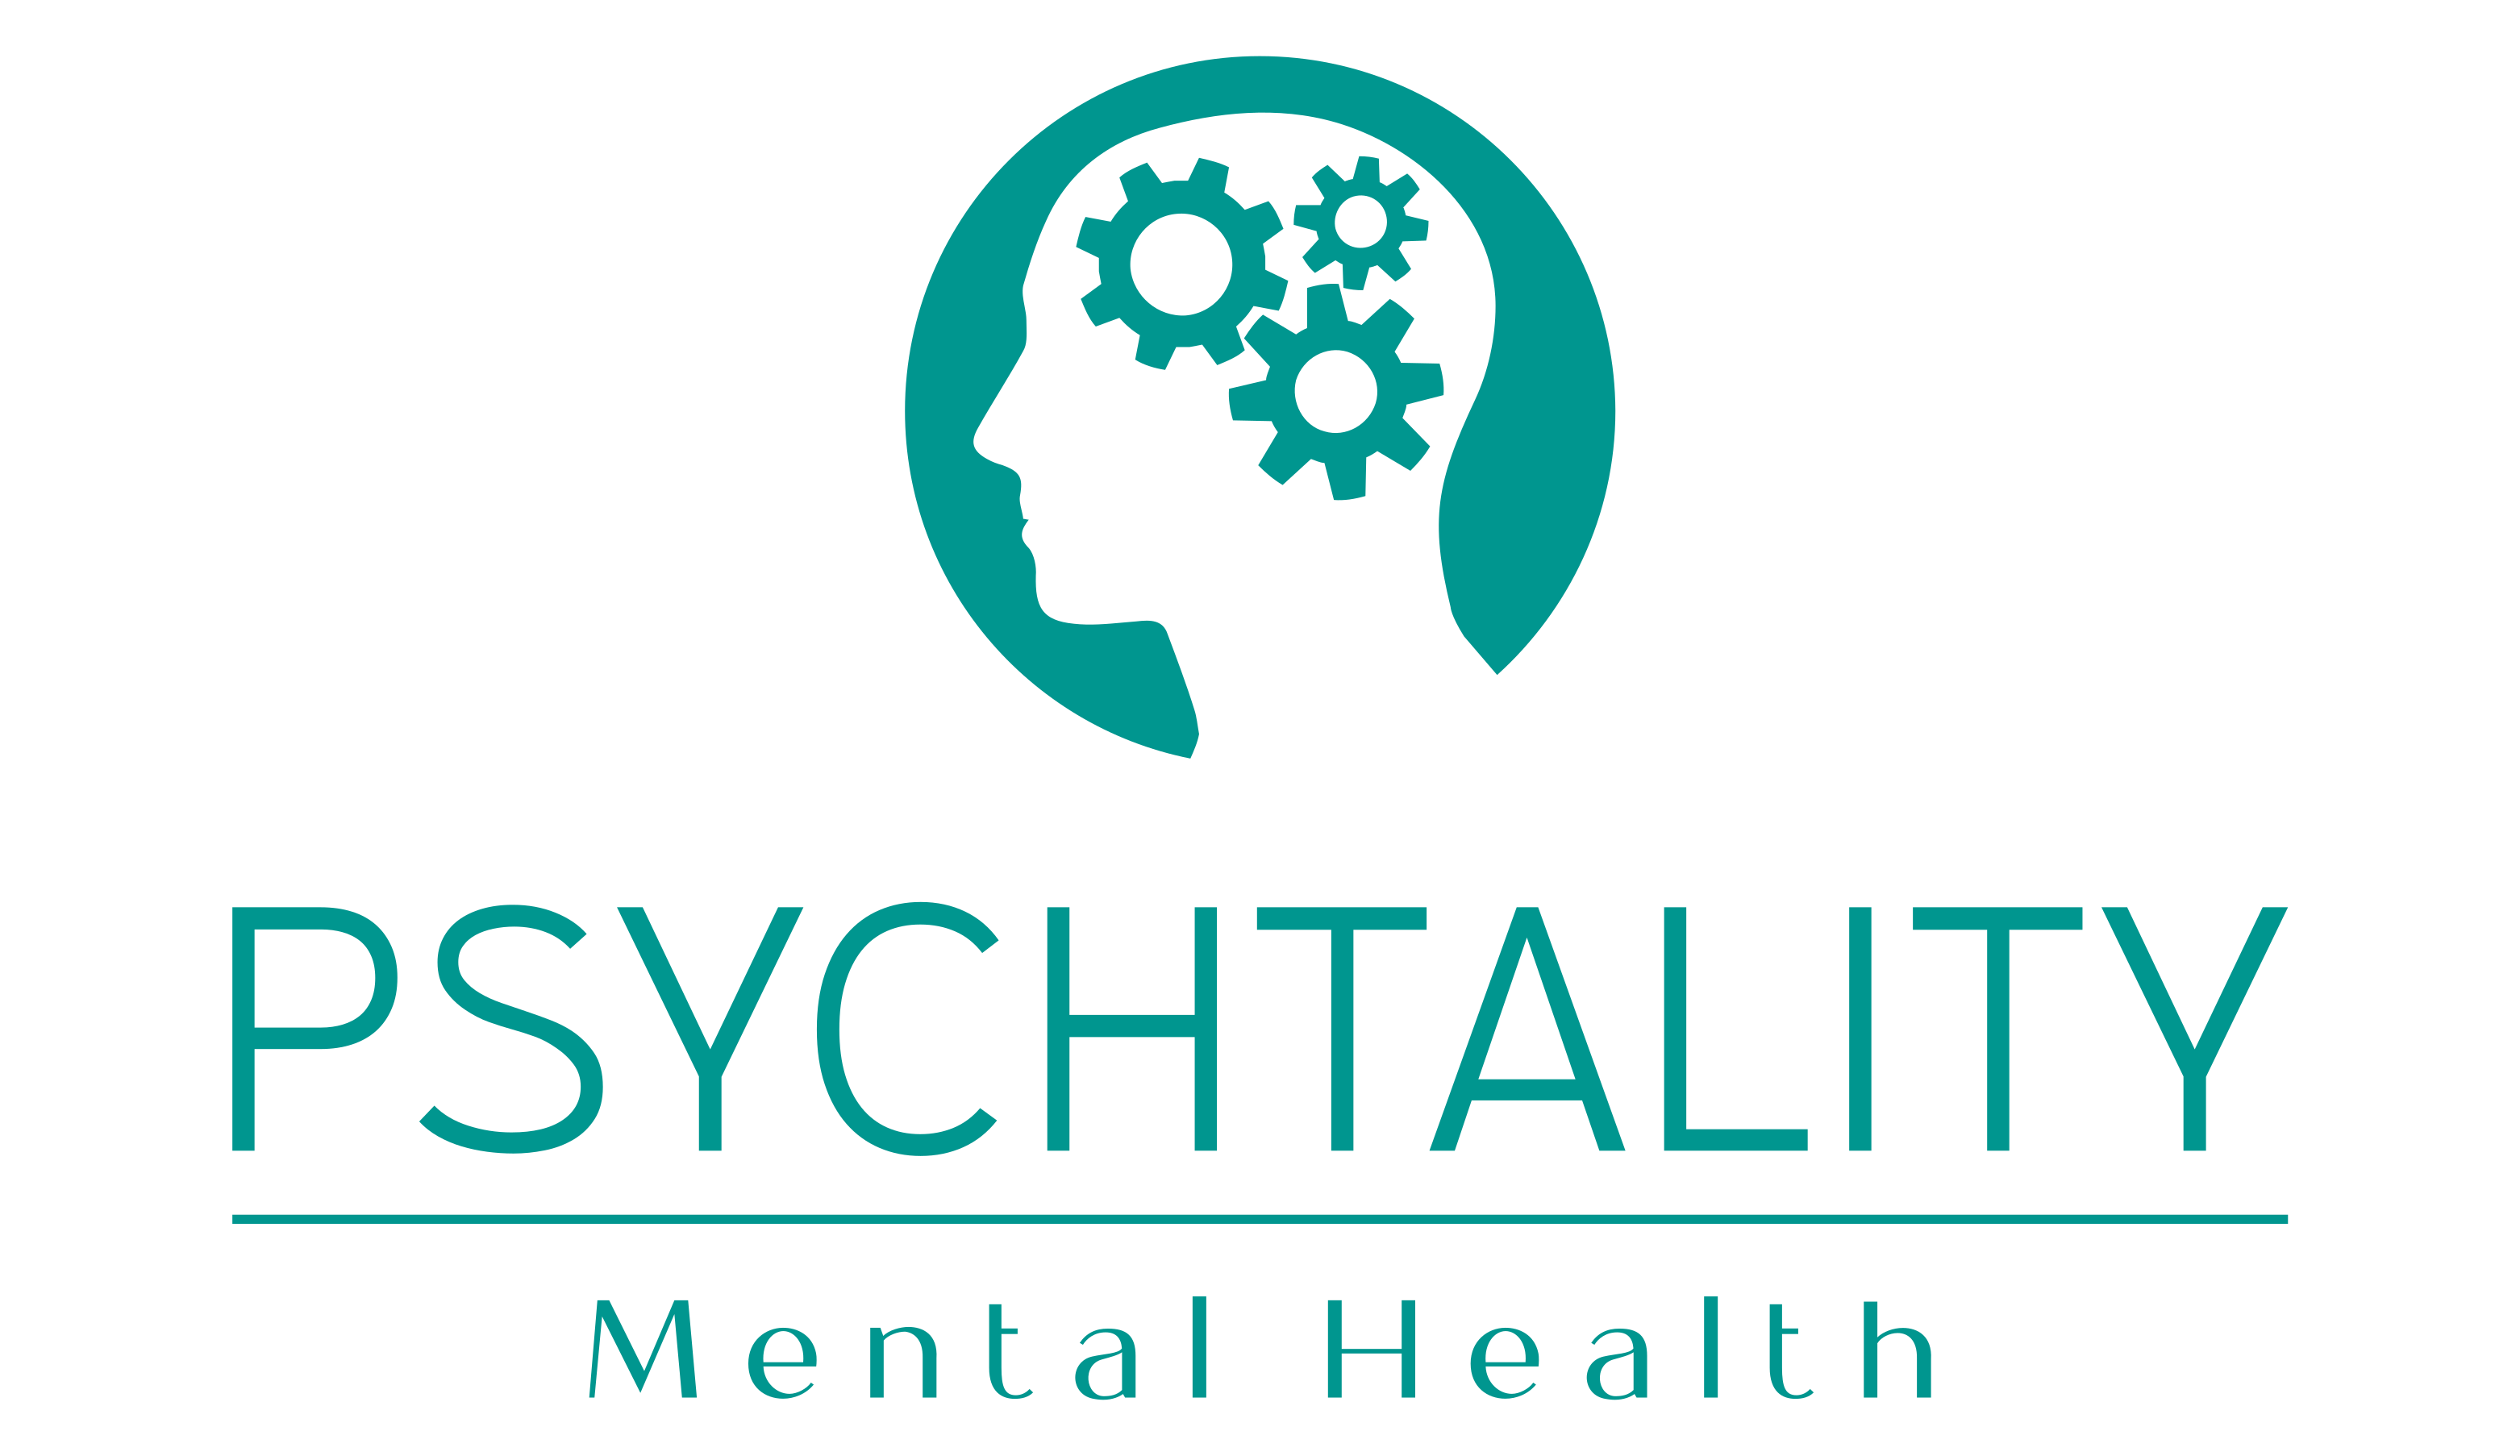 Psychtality Mental Health